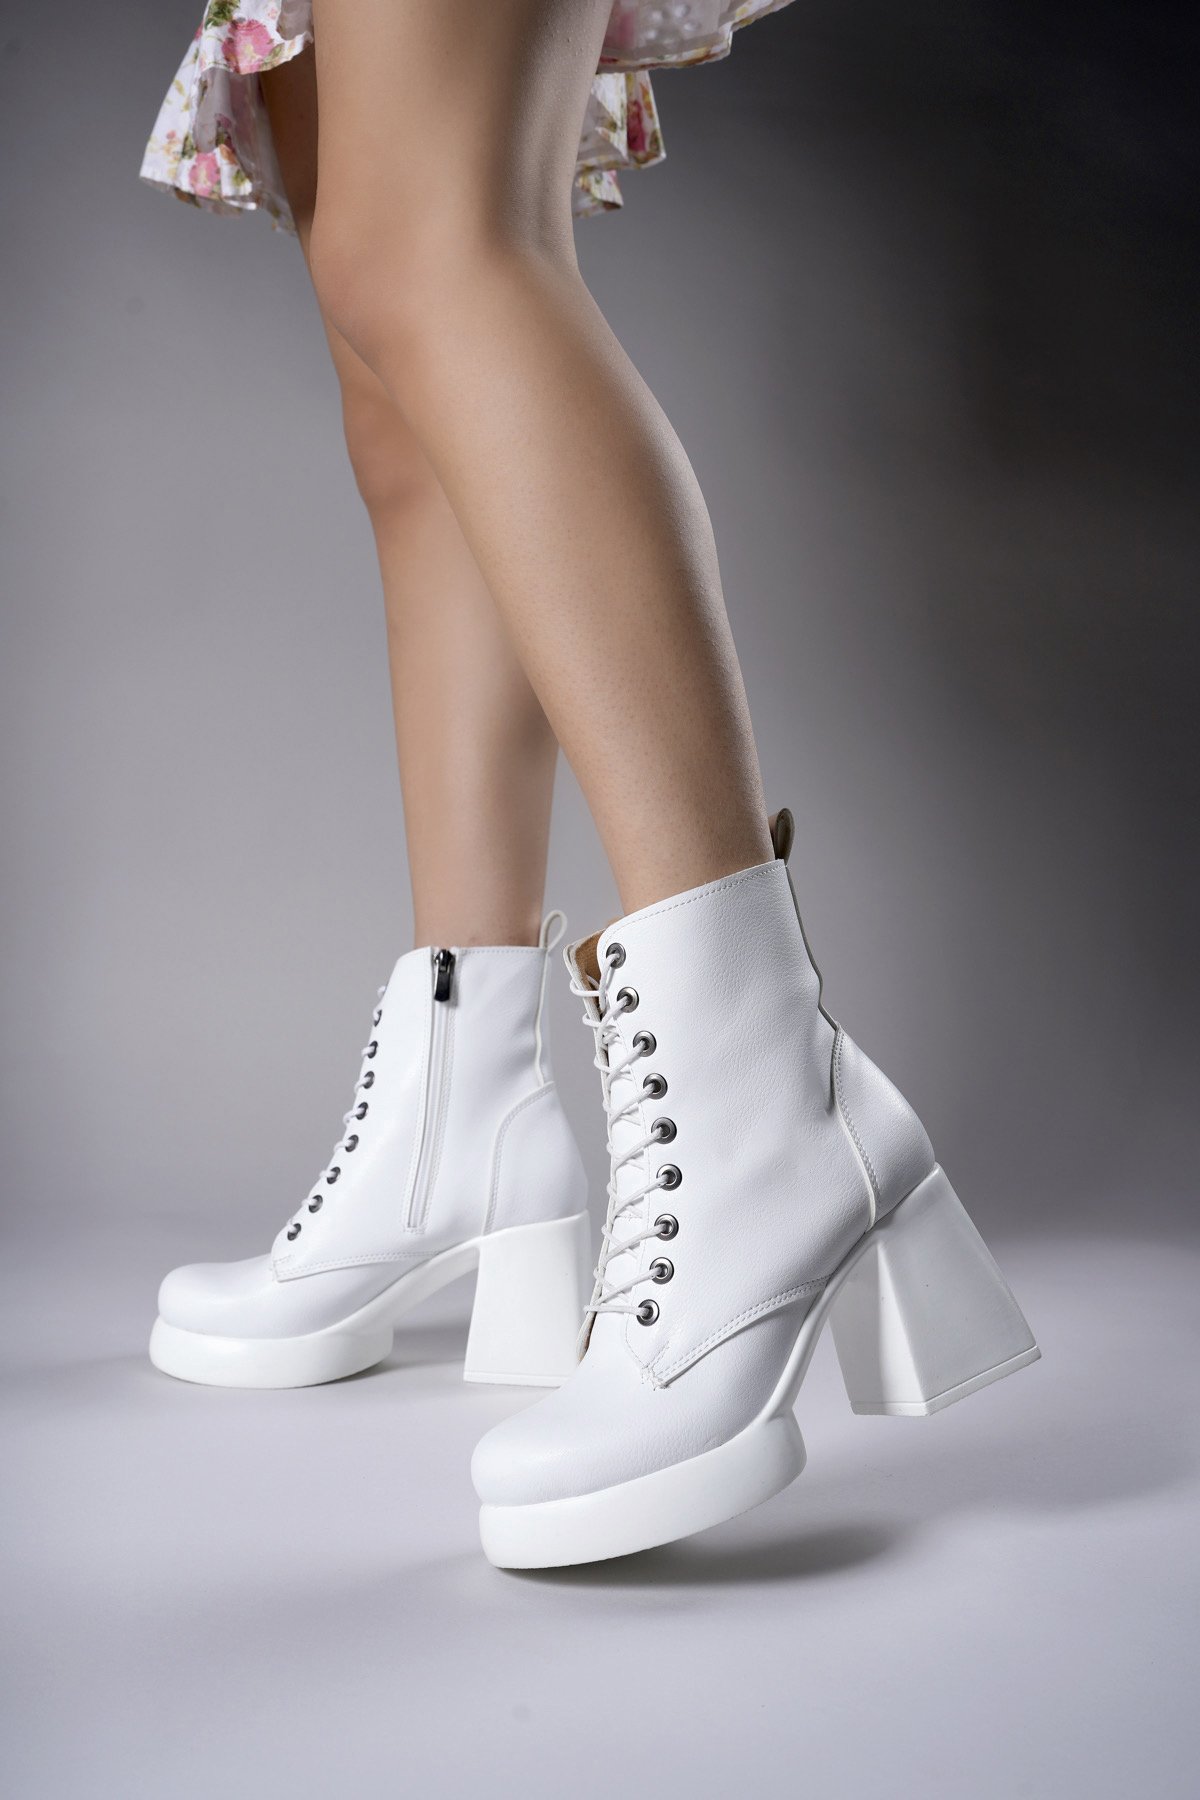 Riccon Iselora Women's Heeled Boots 0012475 White Skin